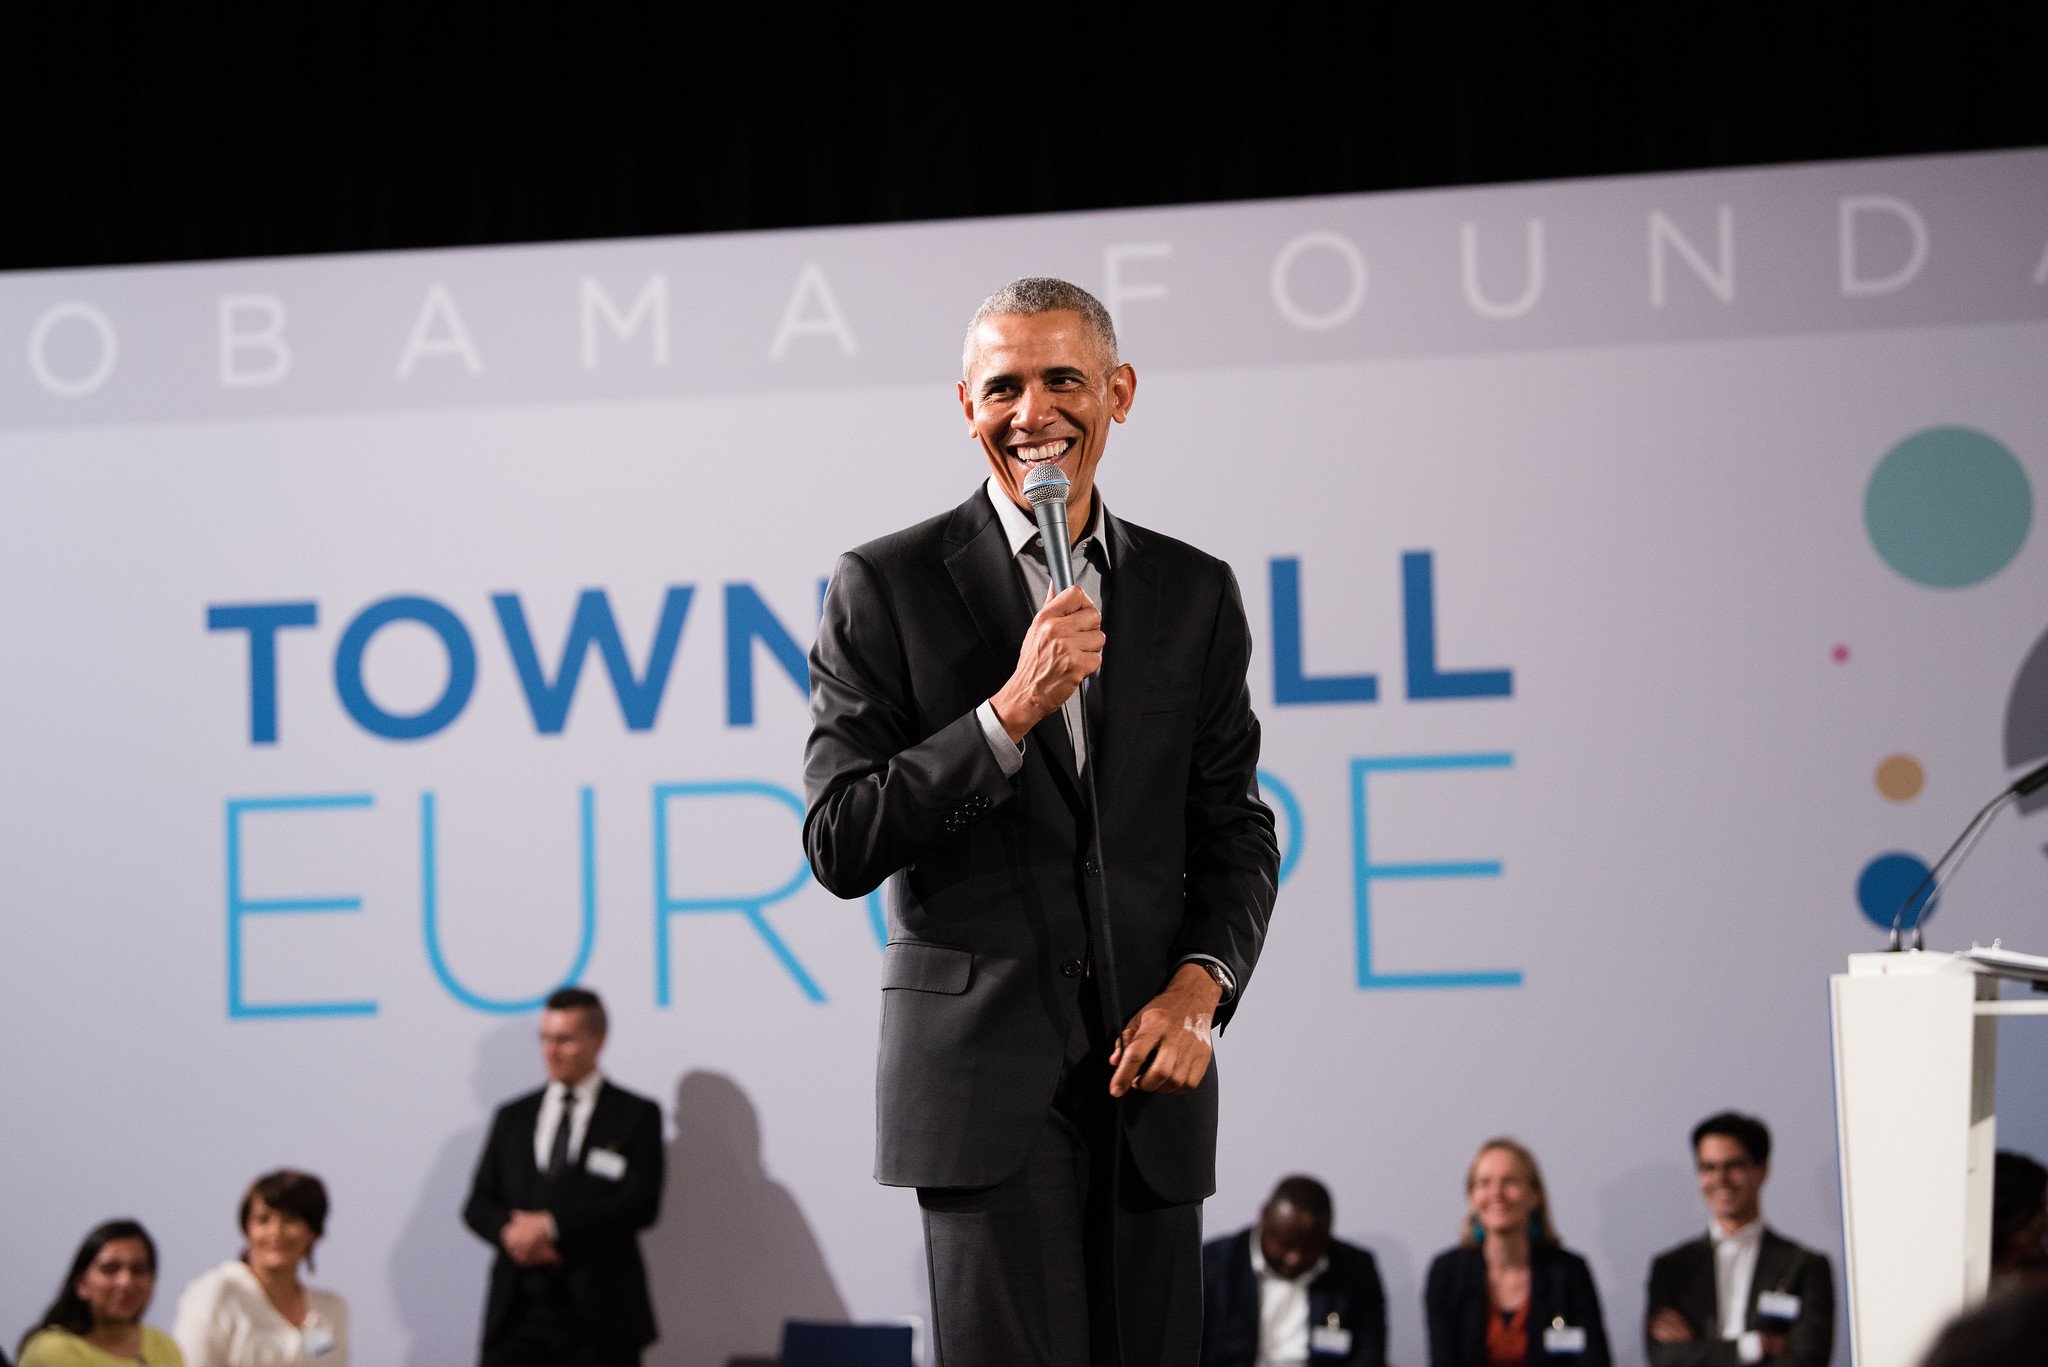 President Barack Obama speaking at ESMT Berlin for the Obama Foundation Town Hall Europe. 